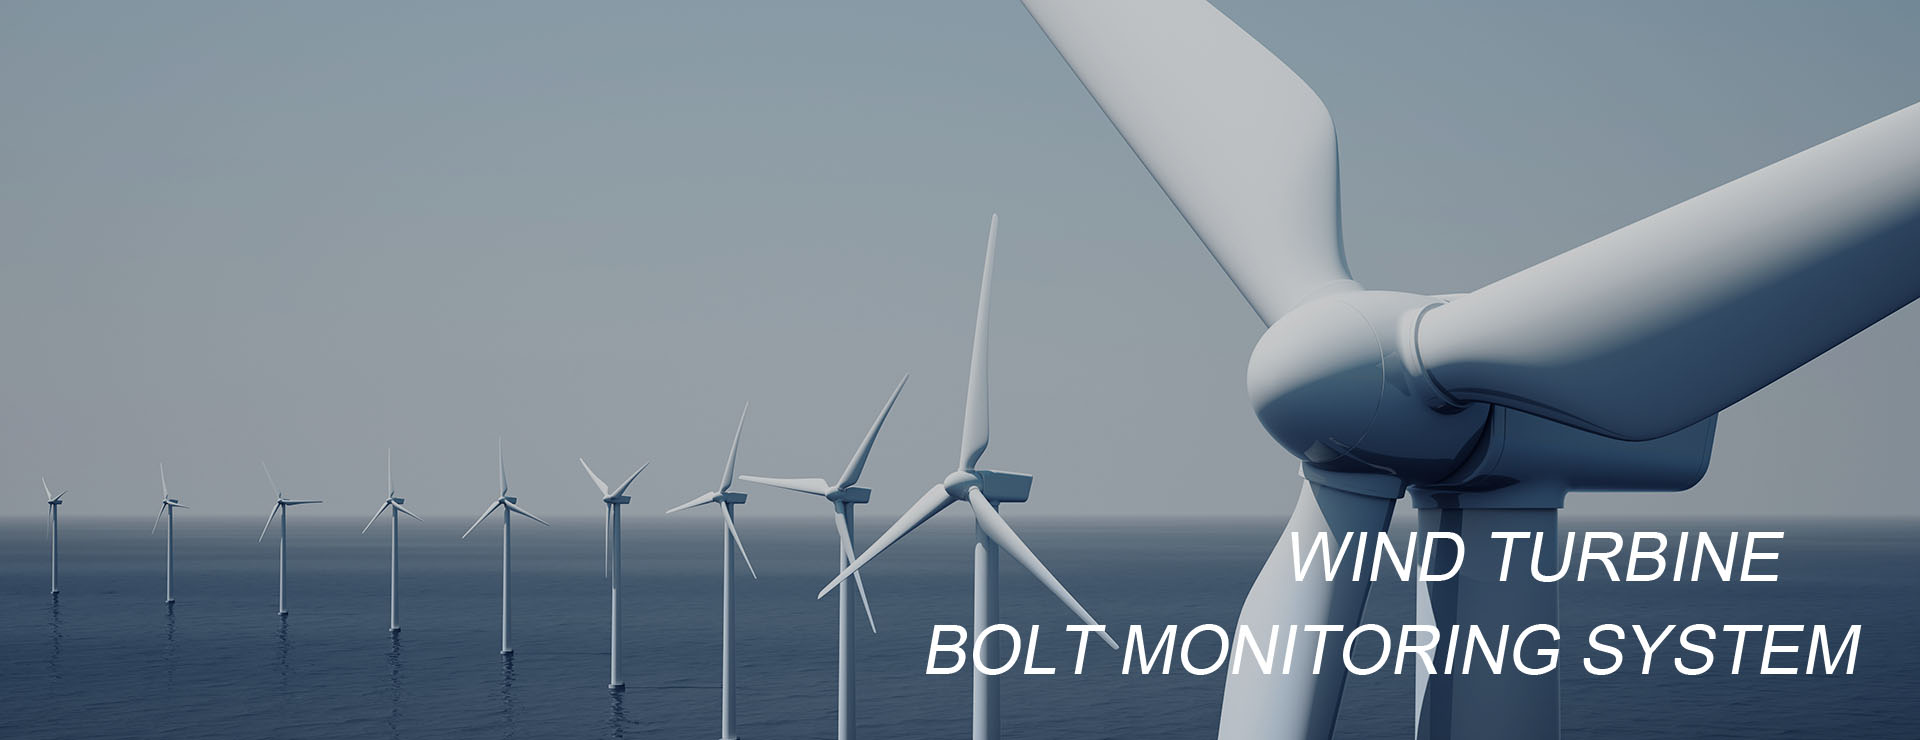 Wind Turbine Bolt Monitoring System